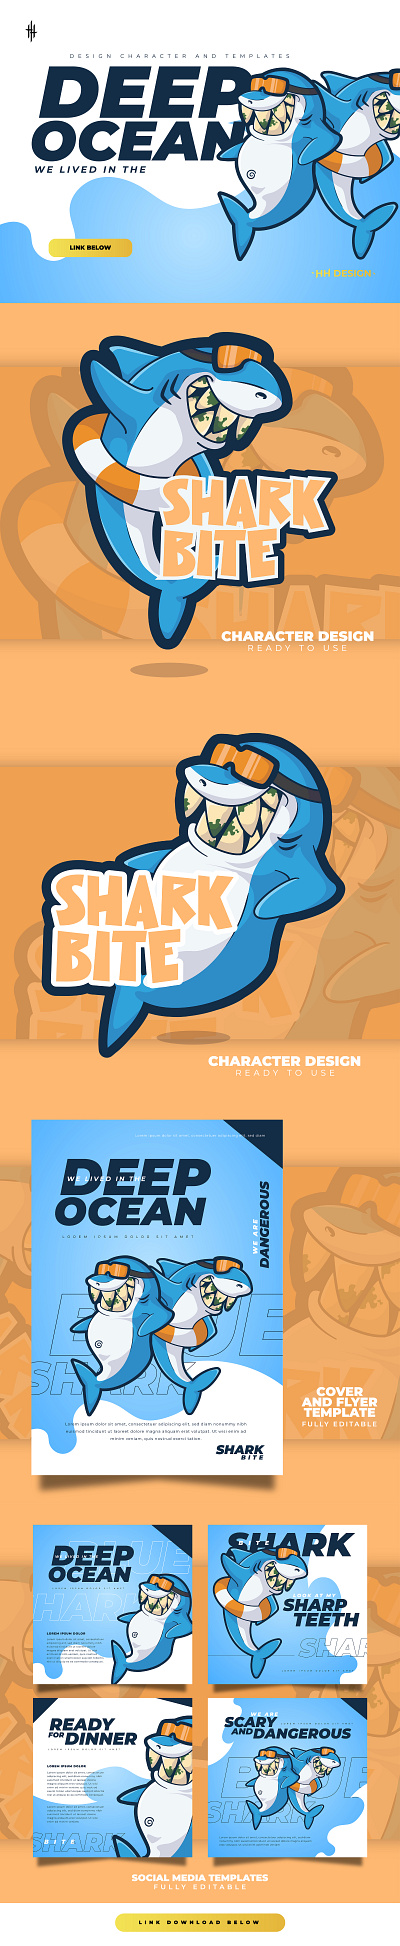 THE SHARK WITH BIG TEETH beach big bite branding character cover deep design fish flyer graphic design illustration instagram ocean post sea shark social media teeth vector